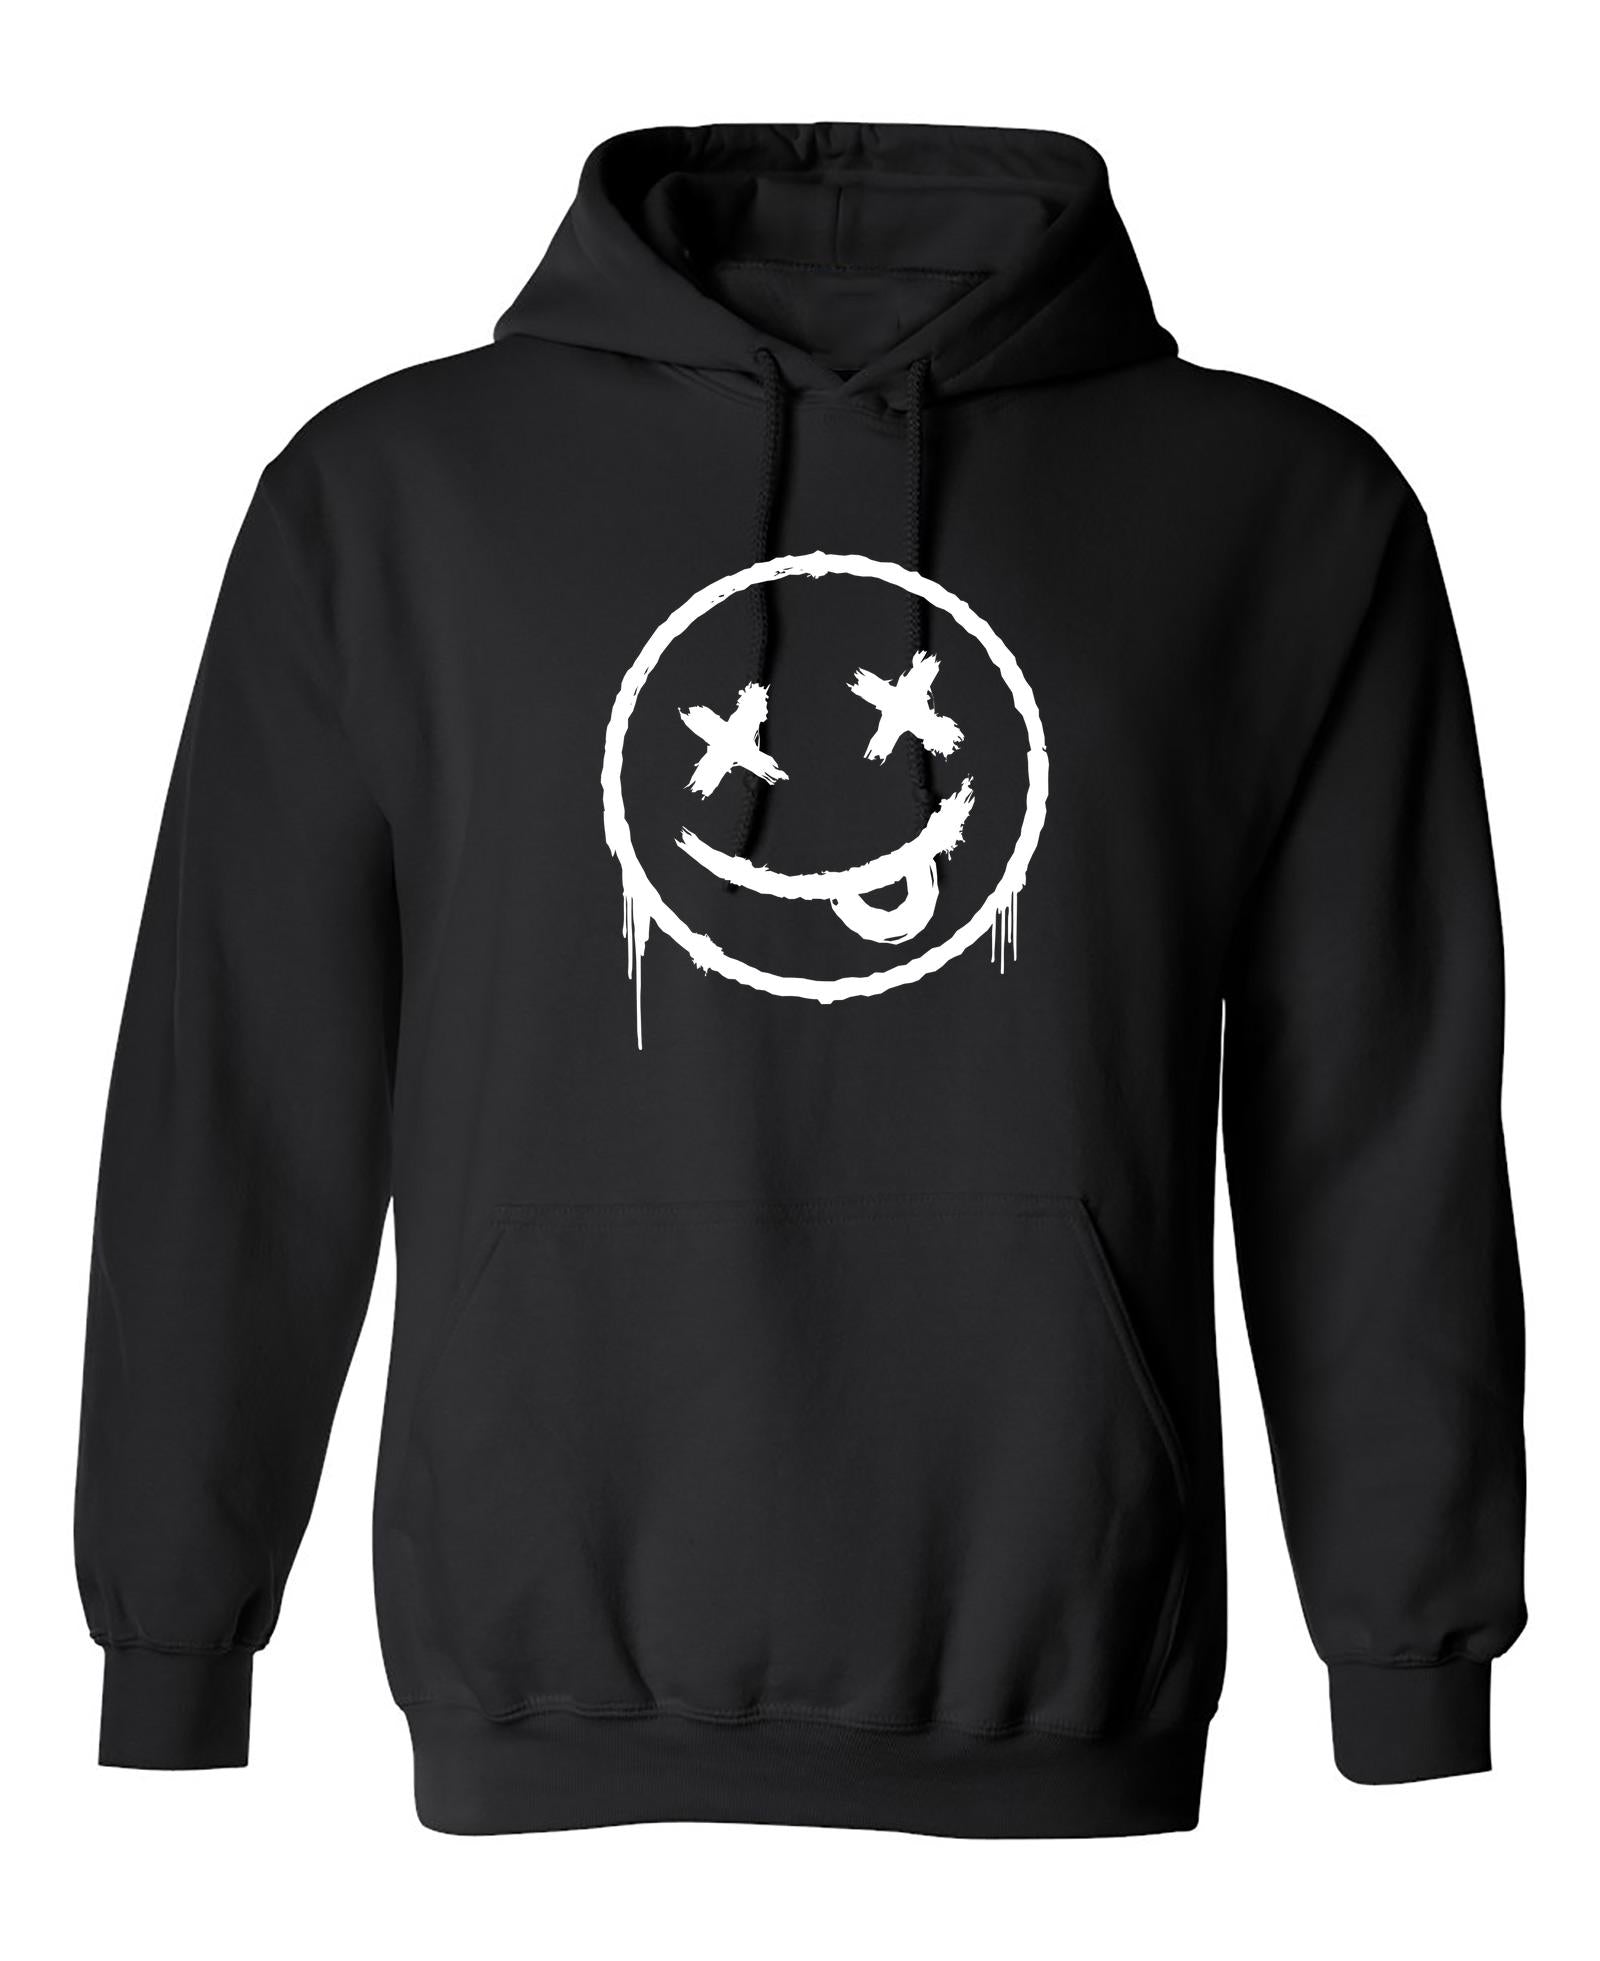 Funny T-Shirts design "Smile X Eyes Emoji Graphic Tee"